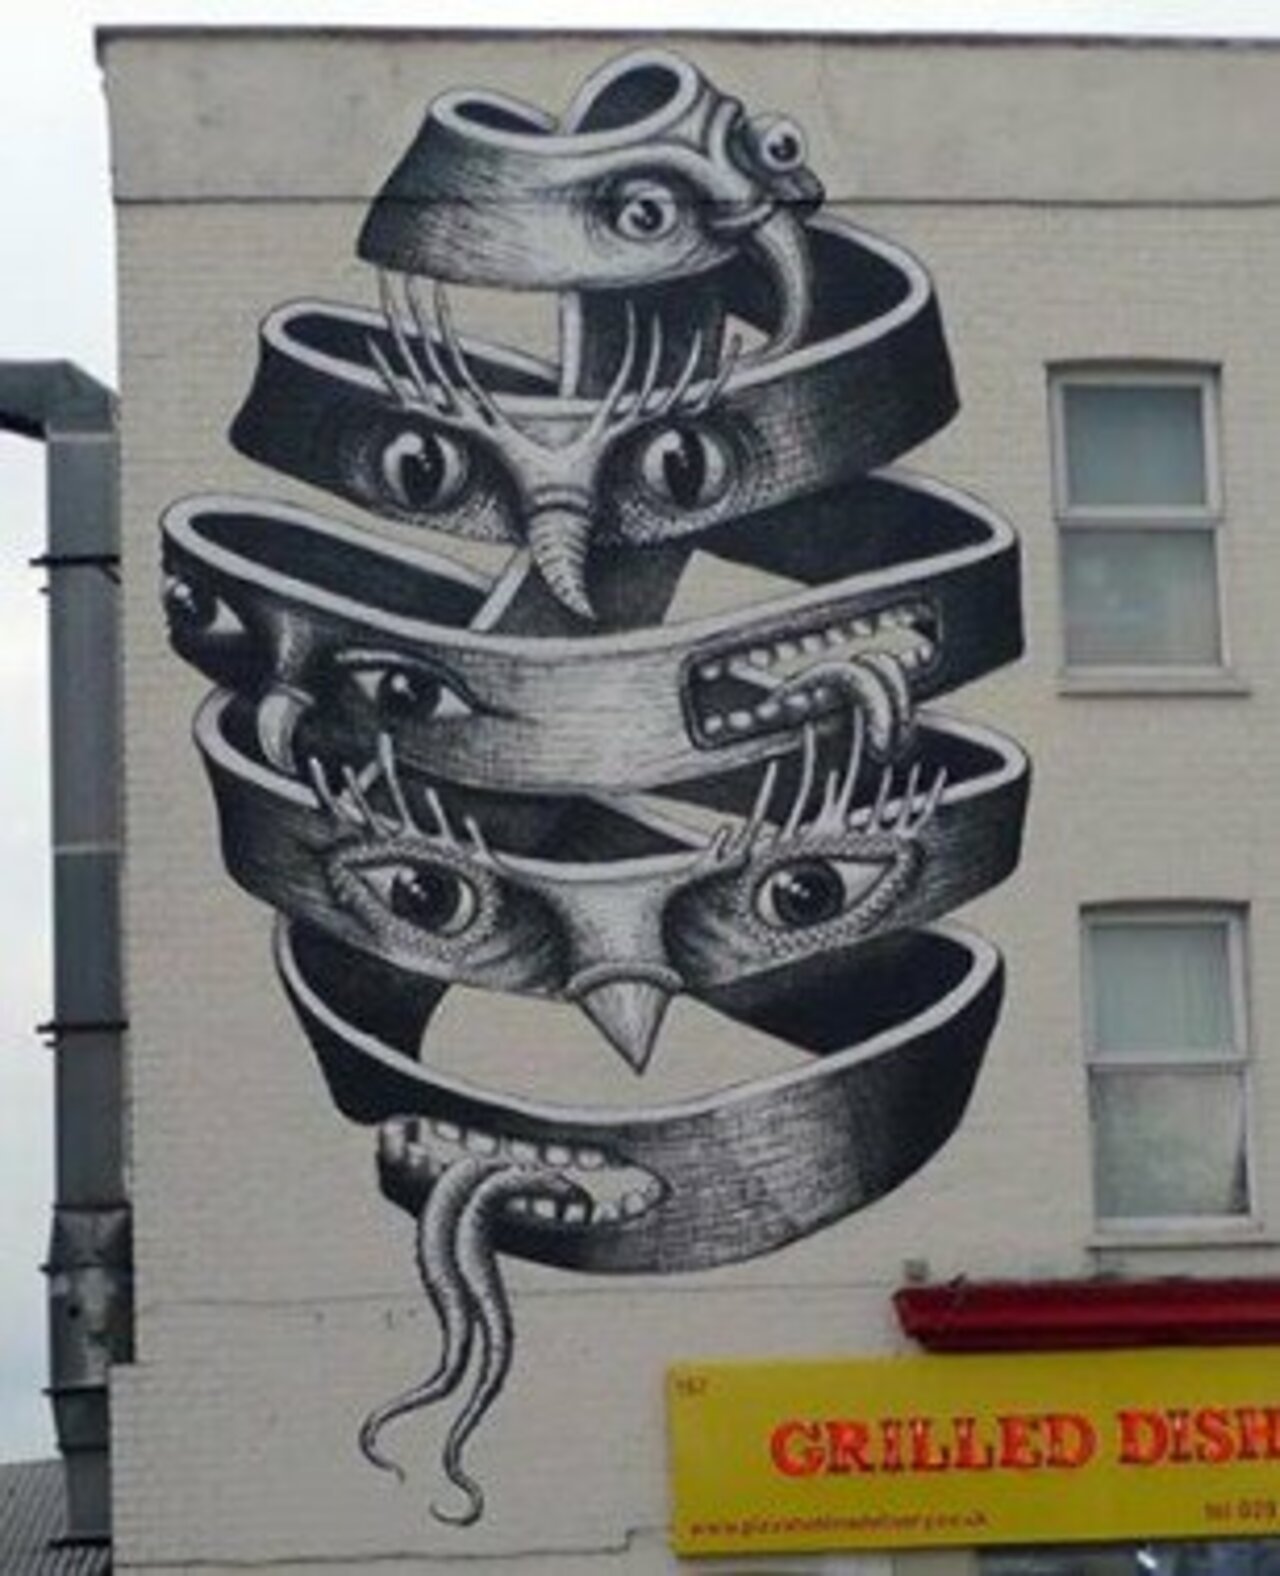 ... #London #UK
by #Phlegm ()
#streetart #graffiti #art https://t.co/mOBsJm0imA